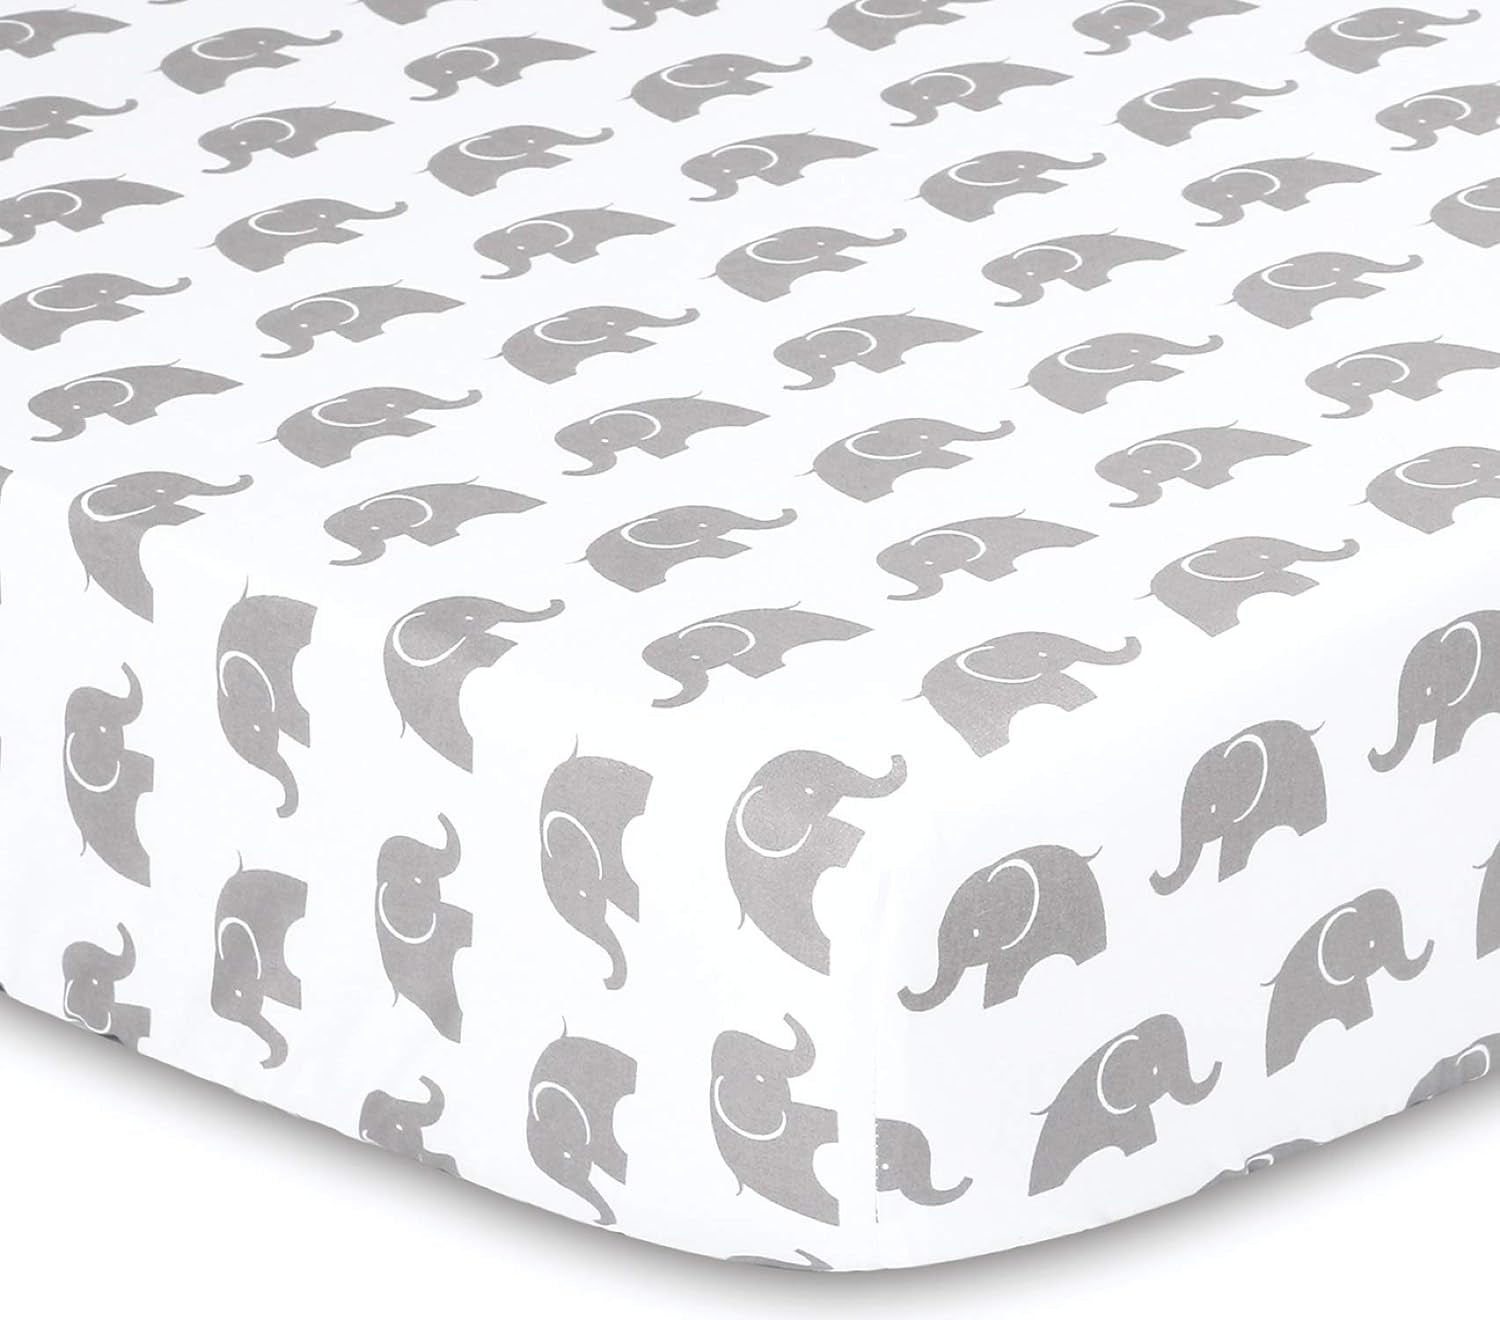 Elephant Walk Crib Bedding Set - 3 Piece Unisex Nursery Set - Crib Quilt, Crib Sheet, Crib Skirt